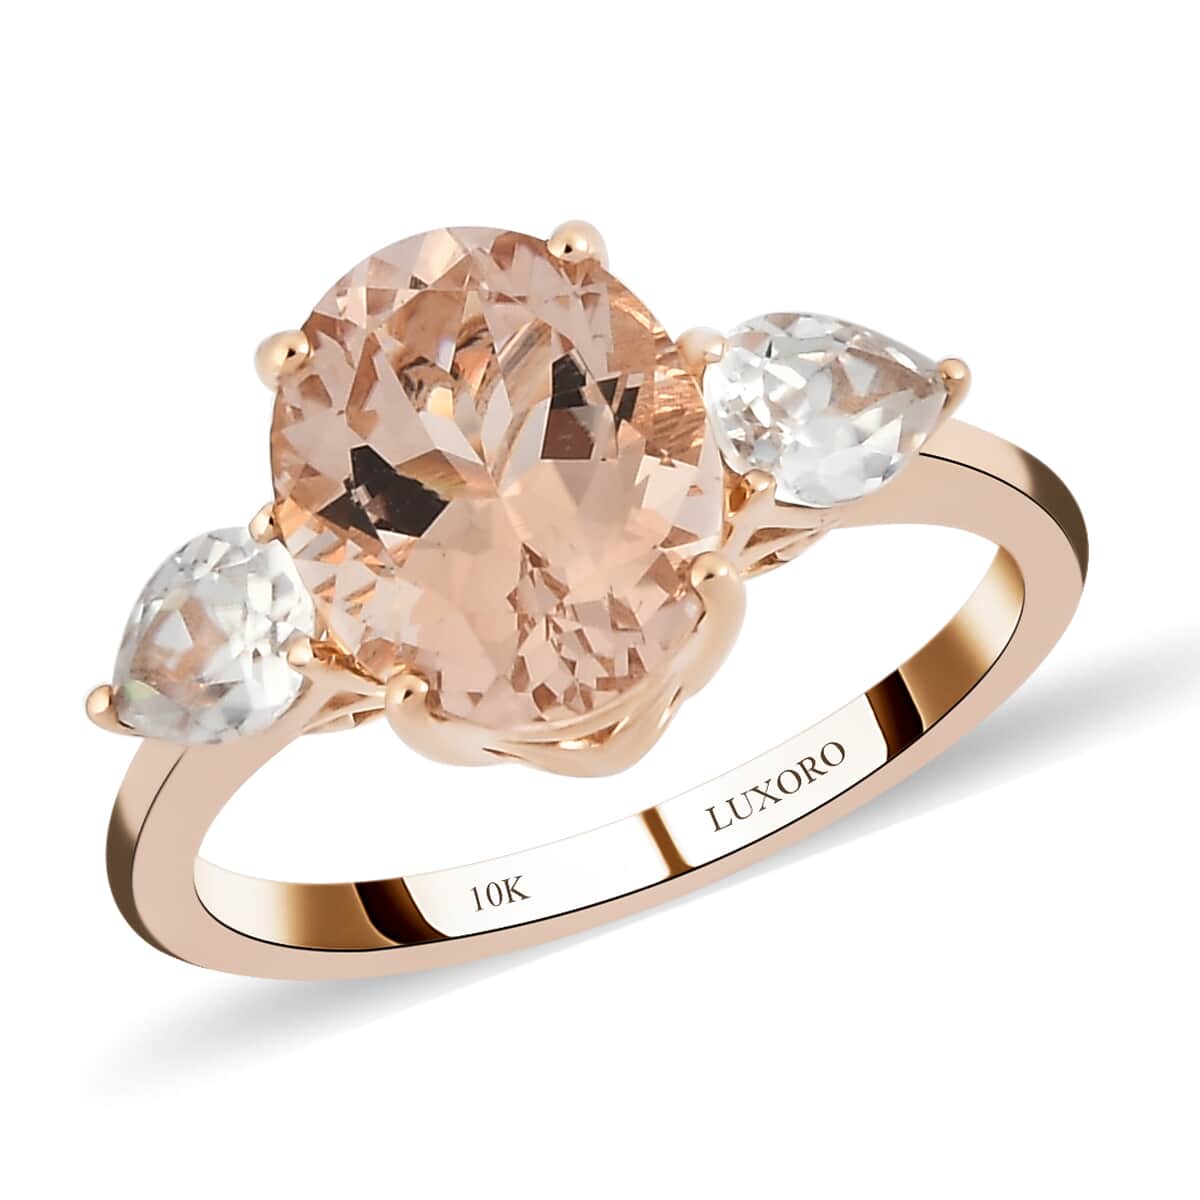 LUXORO 10K Rose Gold Premium Marropino Morganite and Natural White Zircon 3 Stone Ring 2.30 Grams 3.00 ctw image number 0